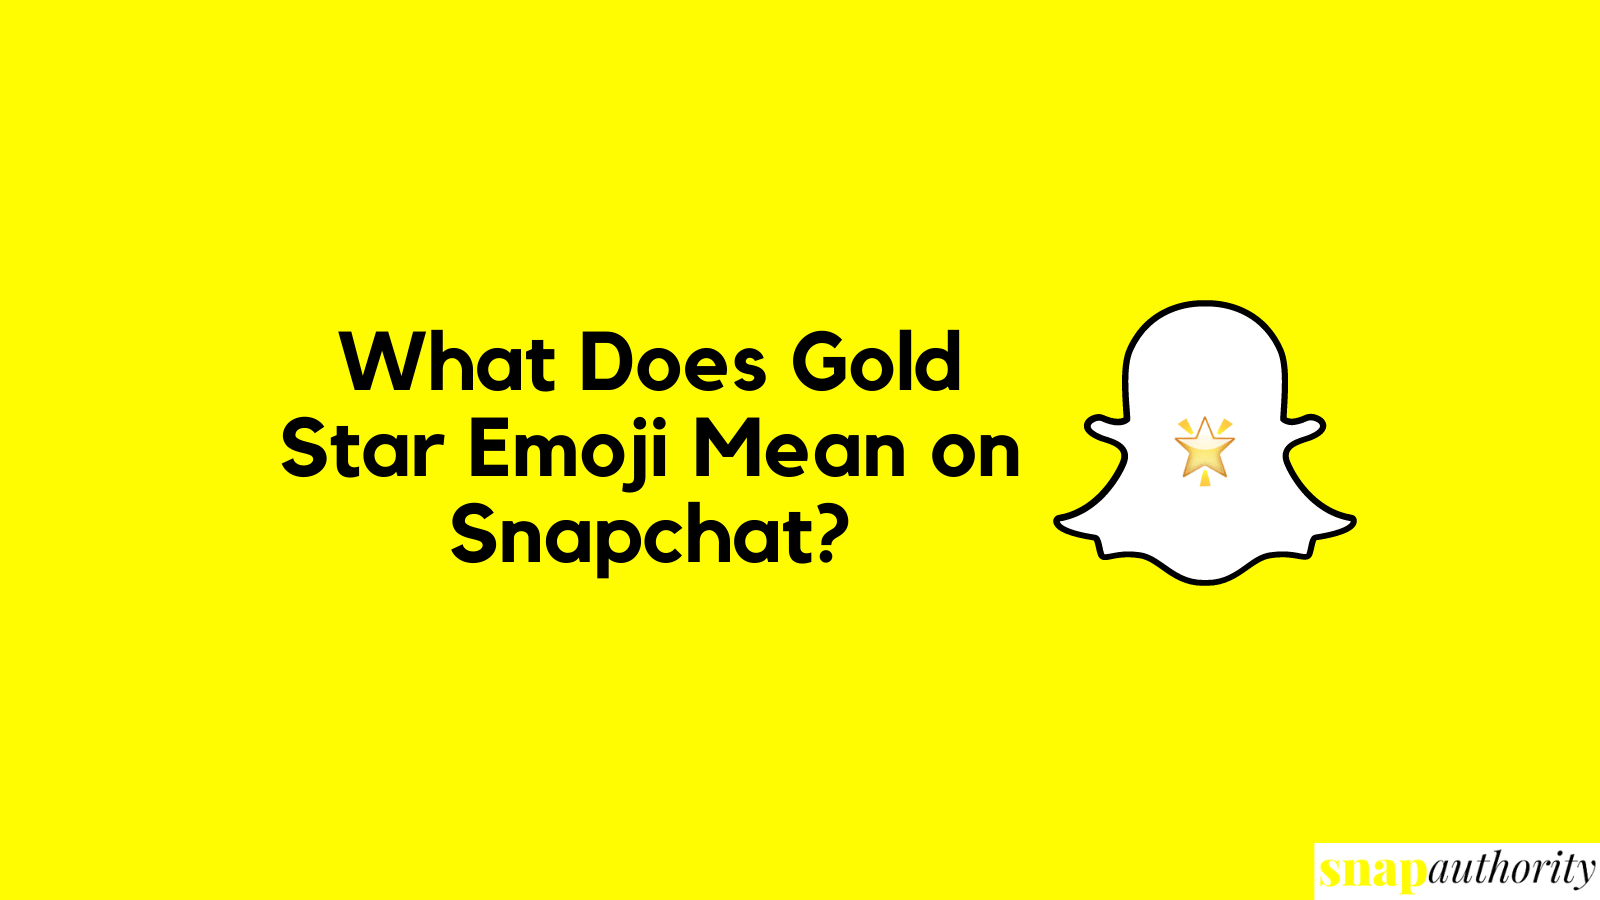 gold star emoji mean on snapchat